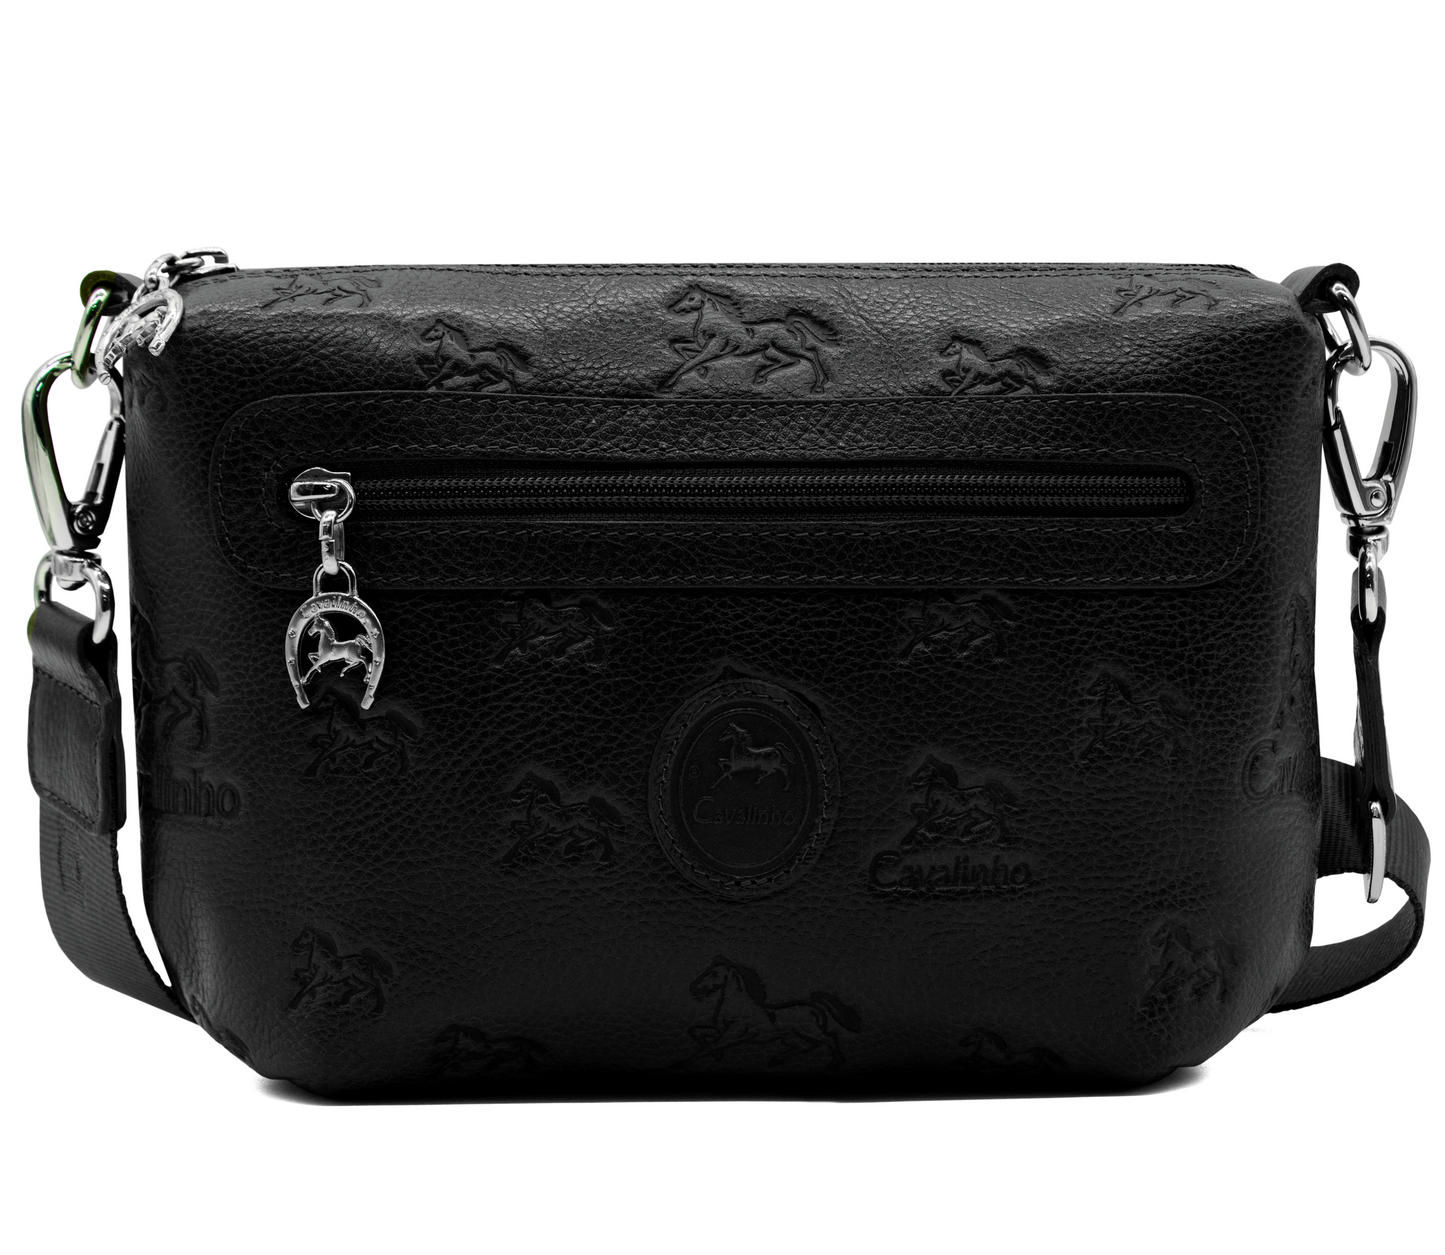 Cavalinho Cavalo Lusitano Leather Crossbody Bag - Black - 18090401.01_1